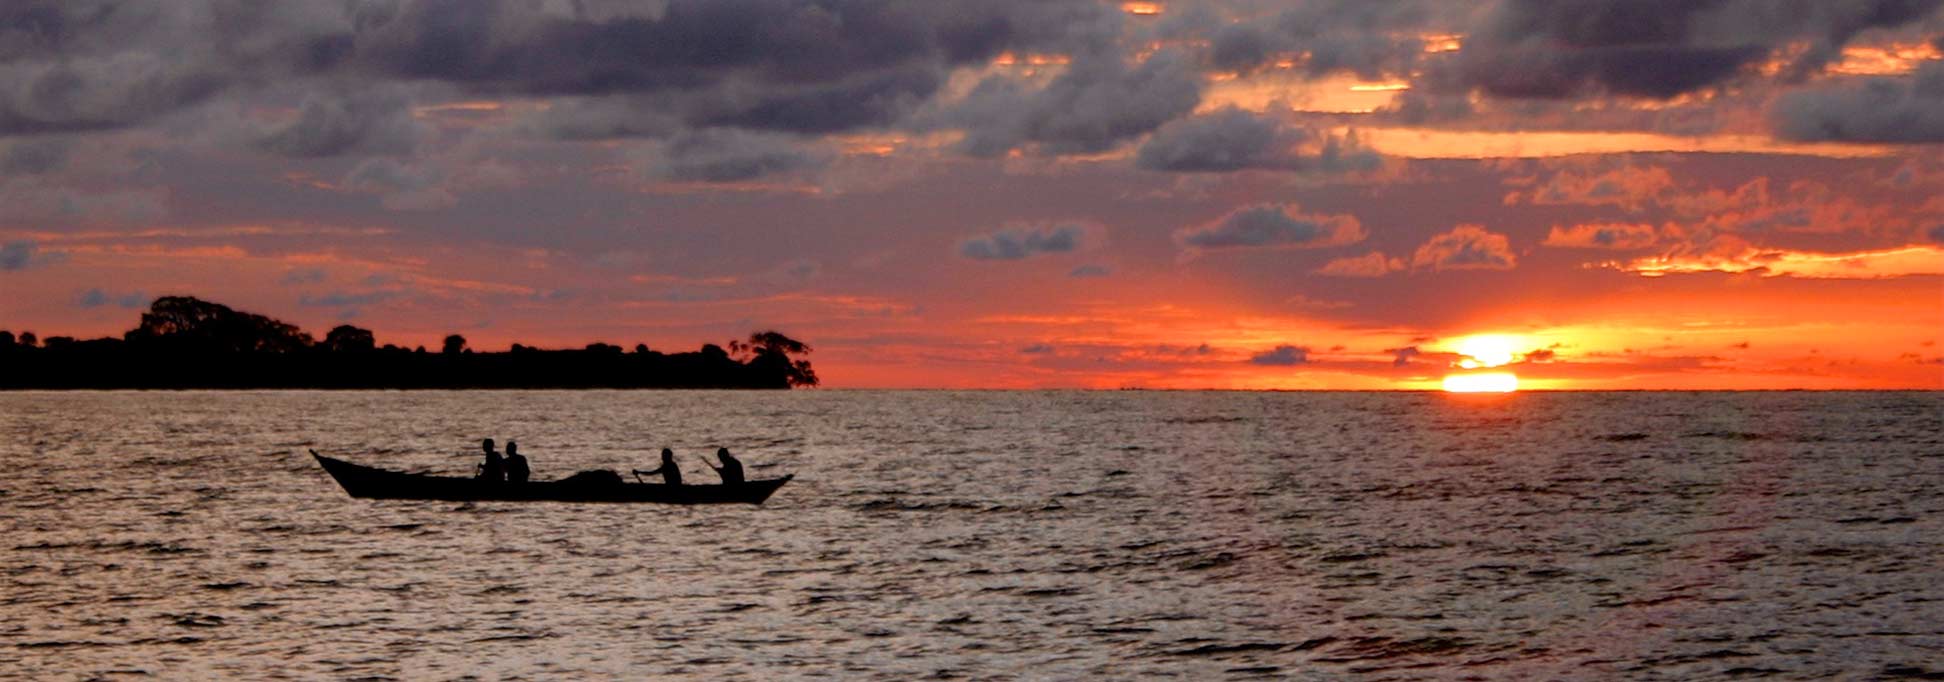 Fishermen on Lake Victoria, Africa's largest lake